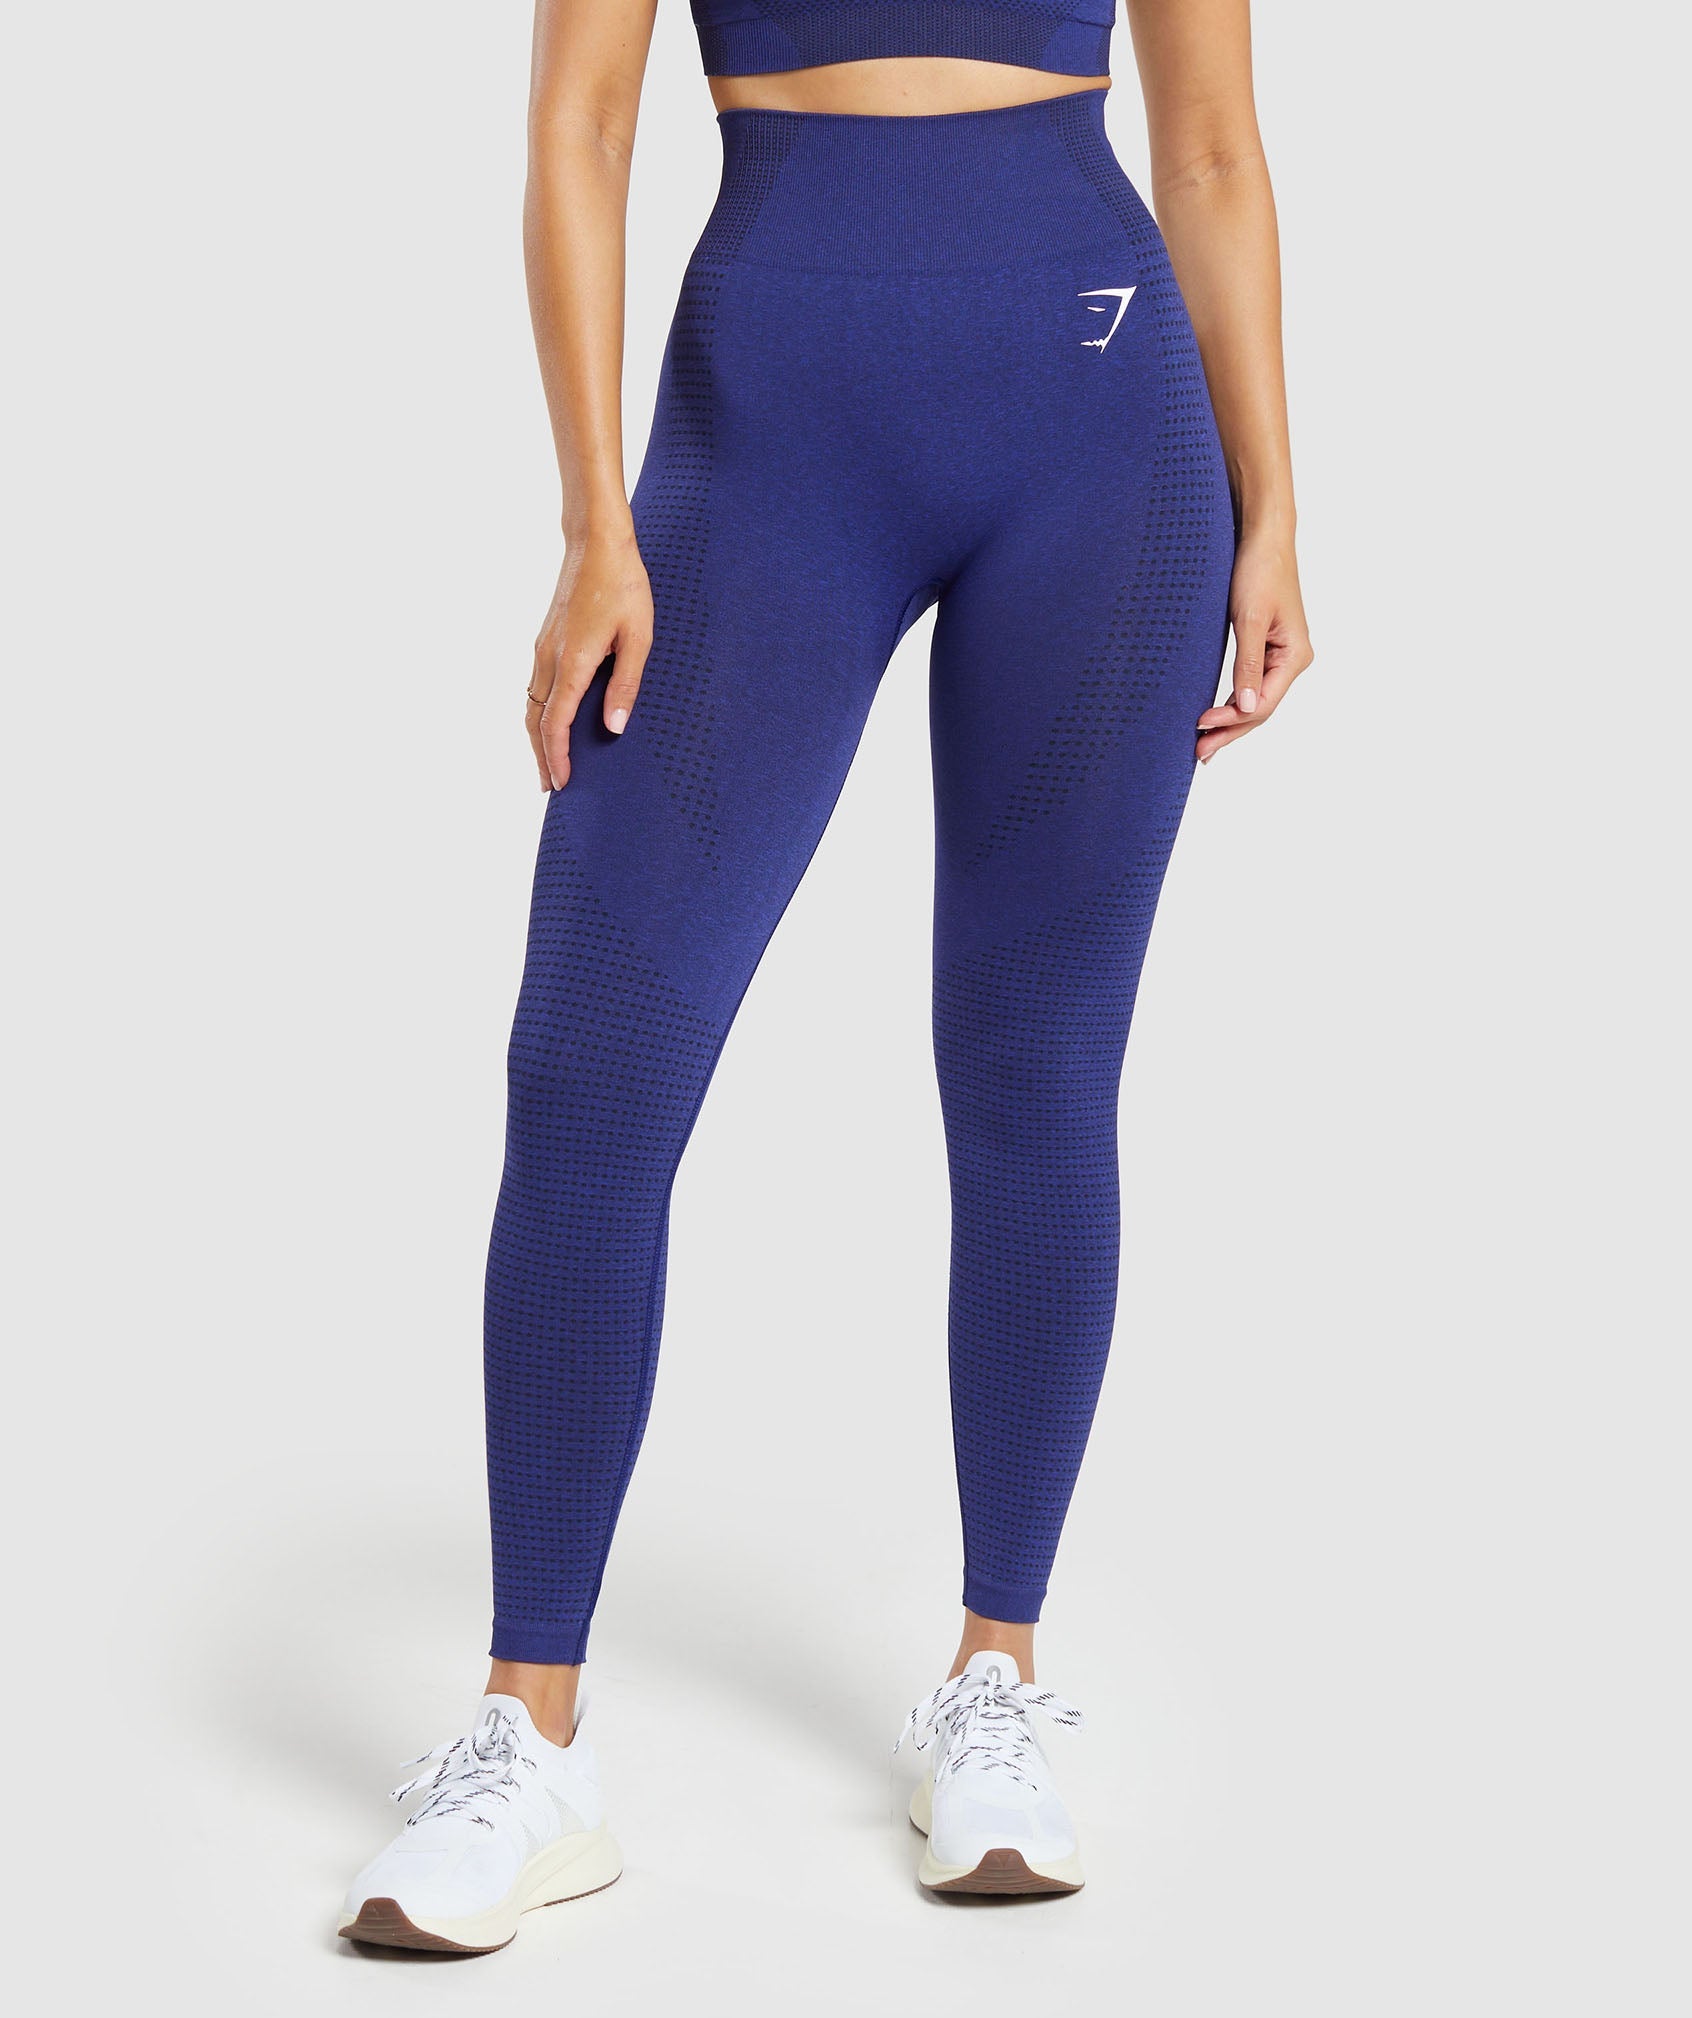 GymX Intense Blue leggings - Sale at Rs 749.00, Sports Leggings